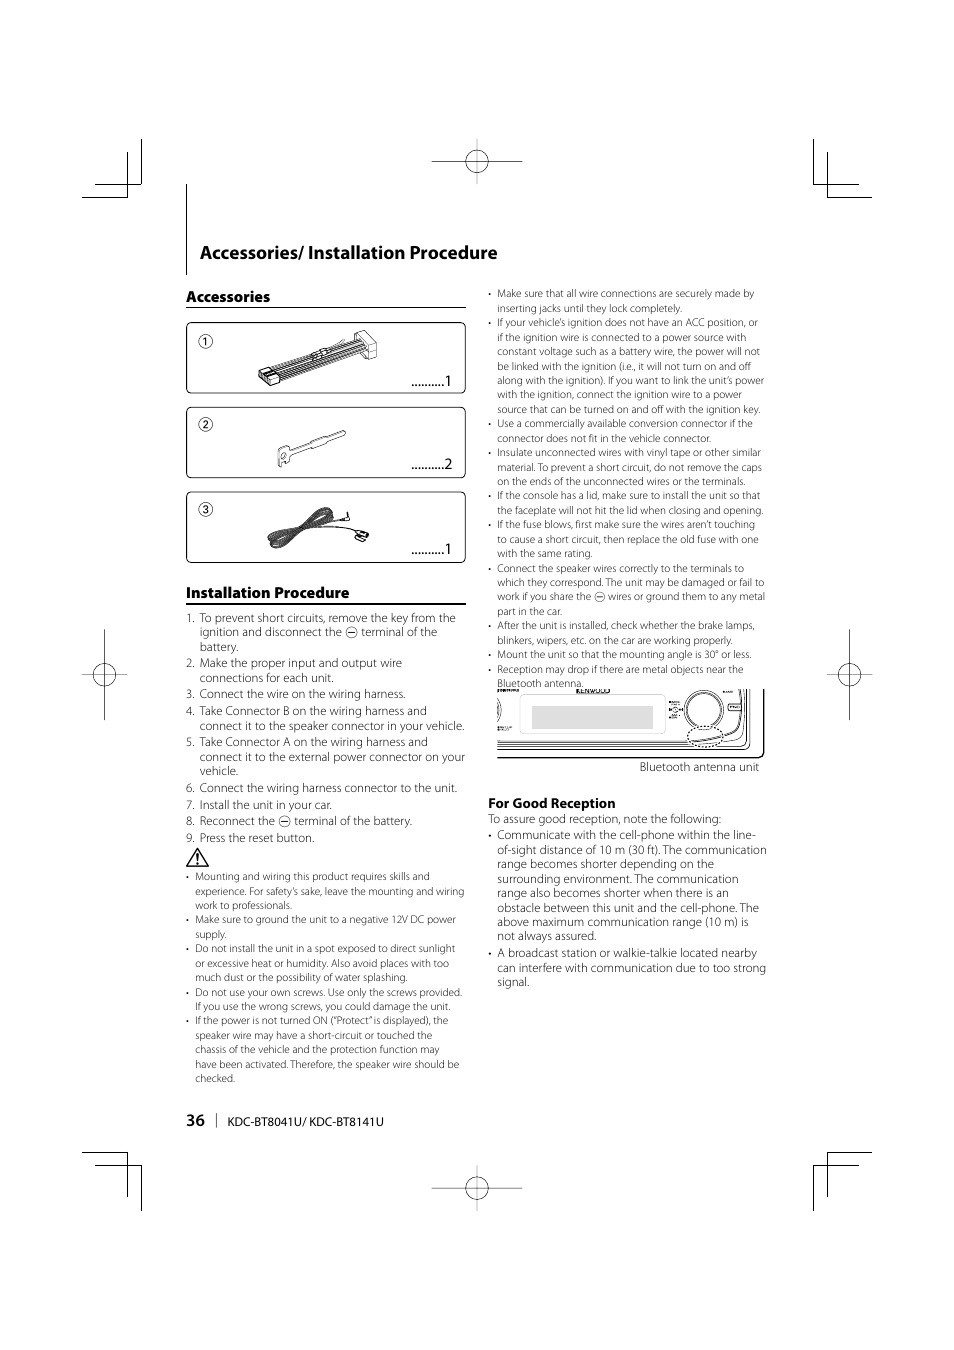 Accessories/ installation procedure, Accessories 1 2 3 installation  procedure | Kenwood KDC-BT8041U User Manual | Page 36 / 48 | Original mode